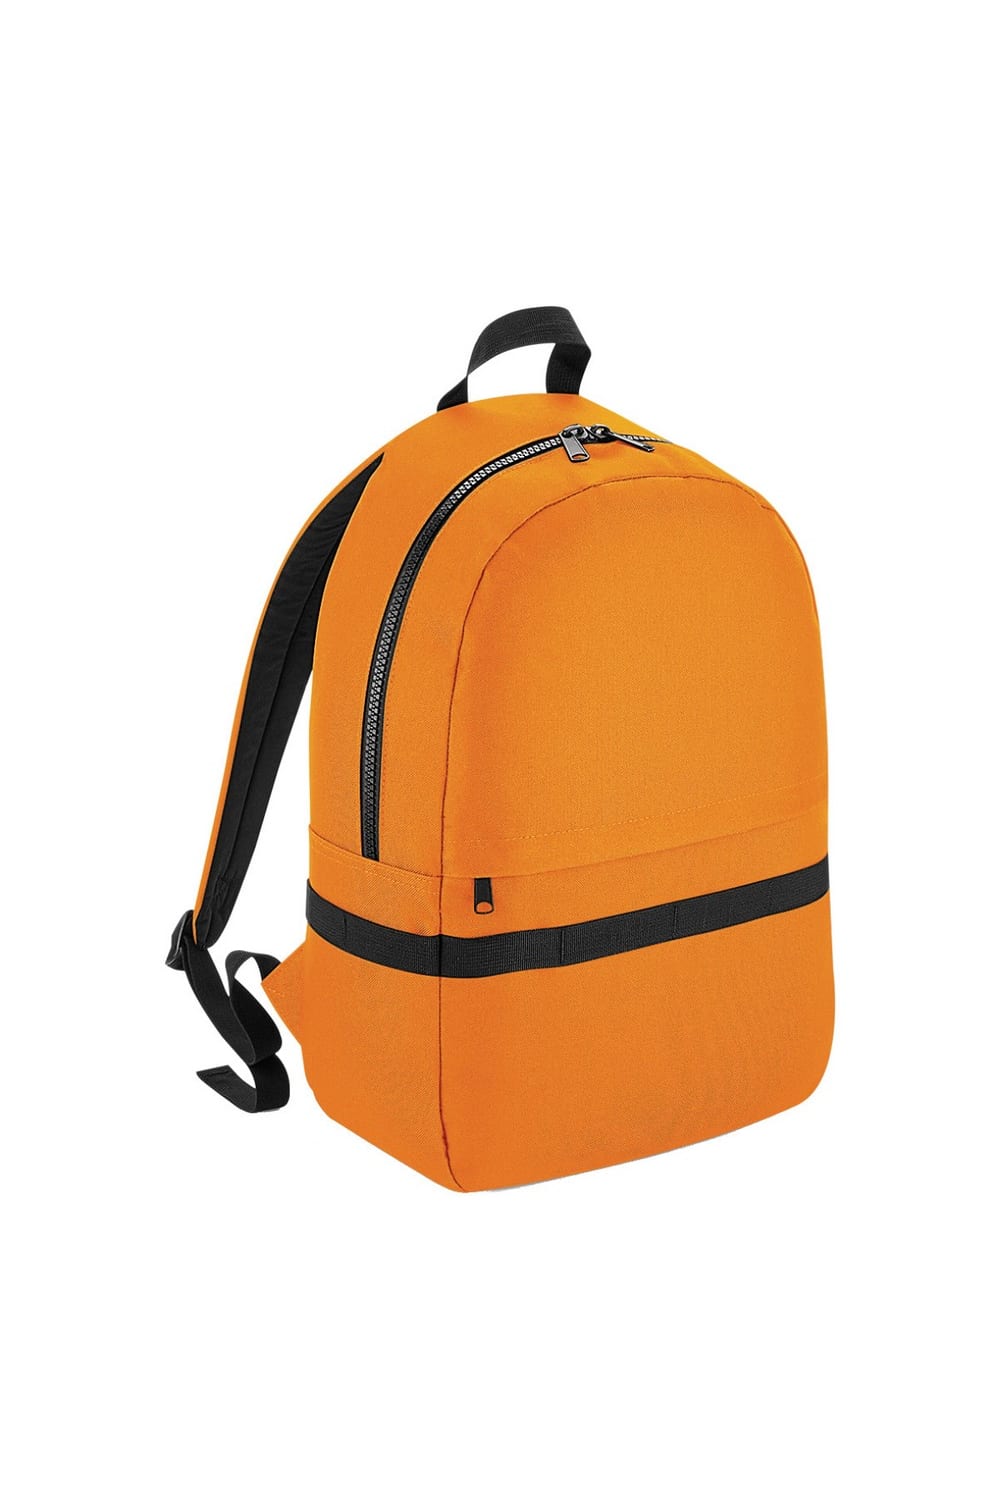 Adults Unisex Modulr 5.2 Gallon Backpack - Orange